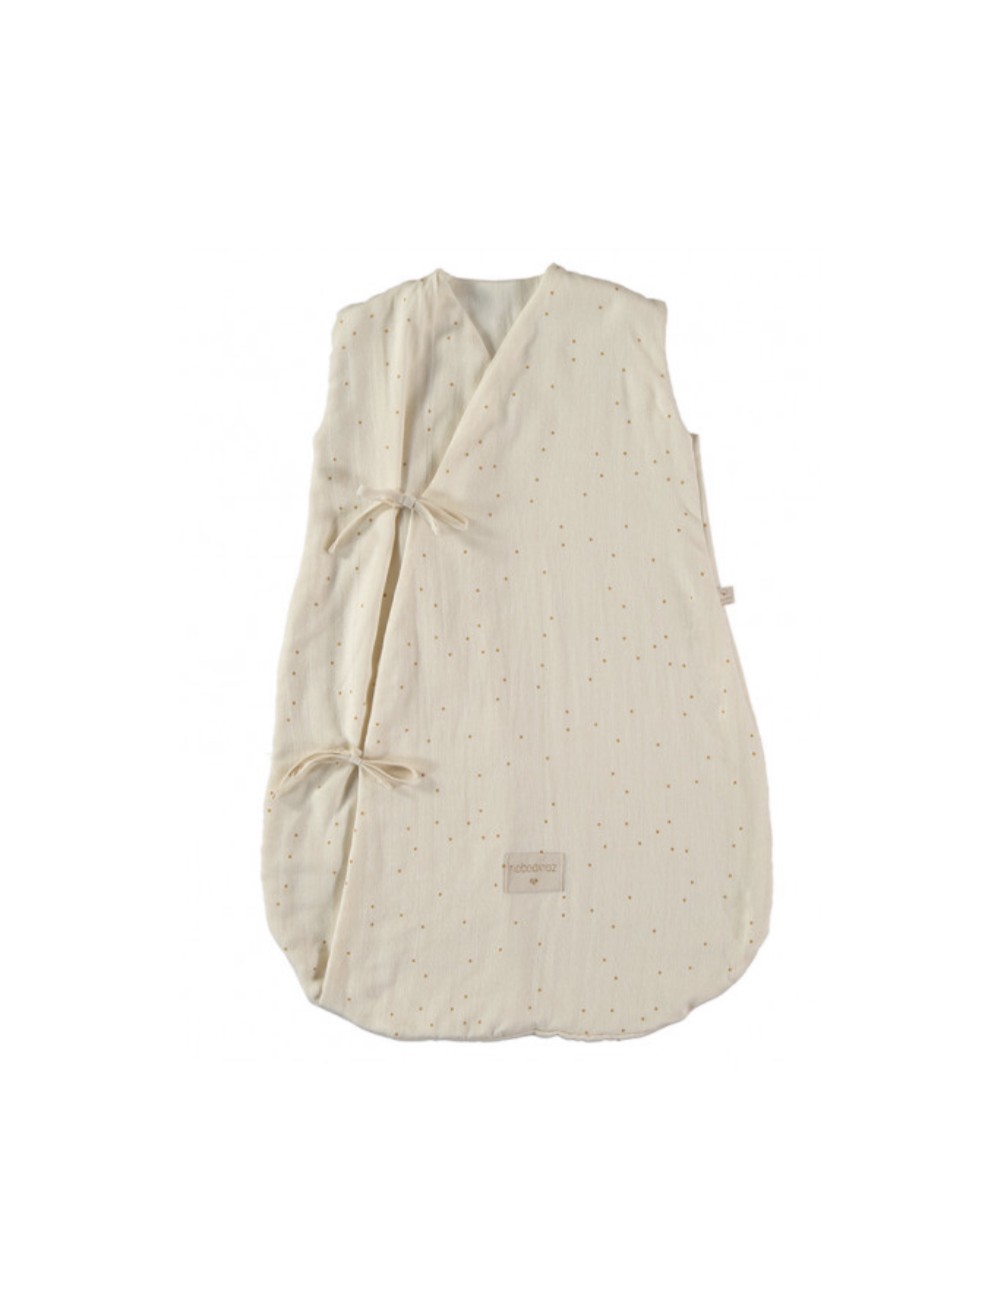 Gigoteuse Dreamy summer sleeping bag 0-6 M honey sweet dots/ natural  En stock